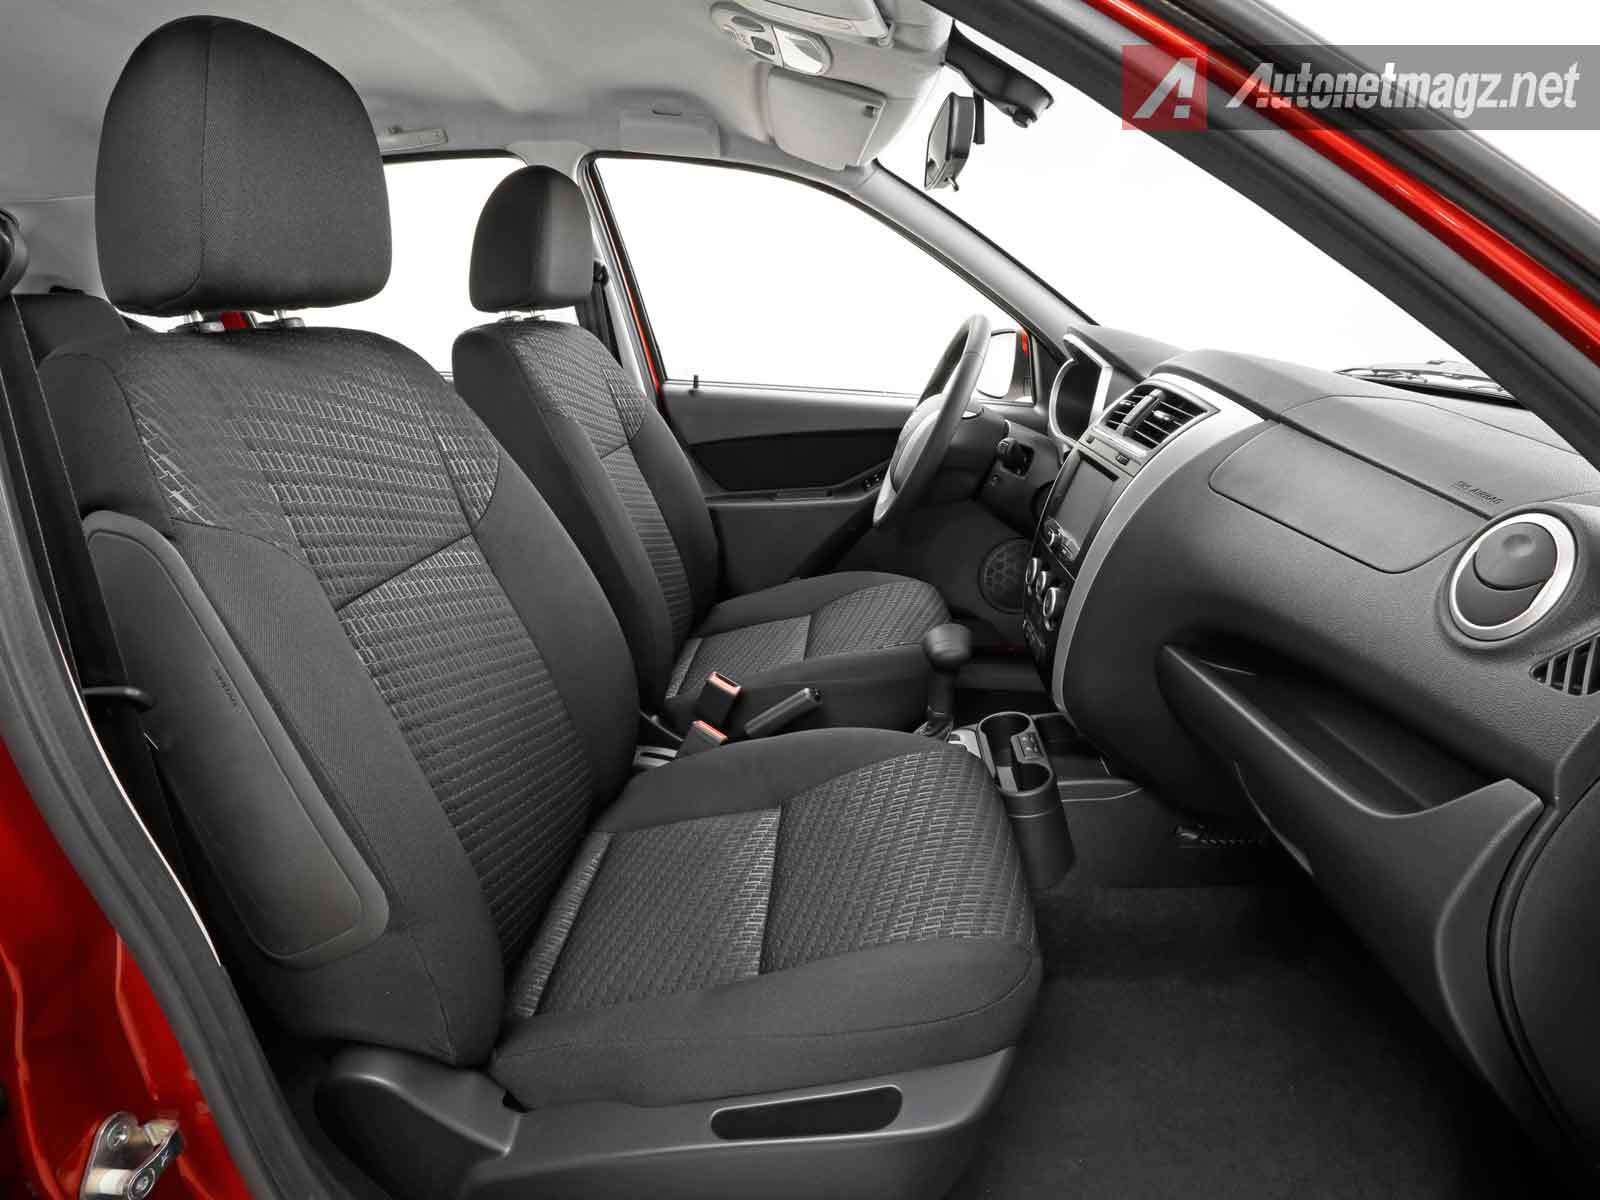 Mobil Baru, Interior-Datsun-mi-DO-depan: Datsun mi-DO, Hatchback Murah Datsun Siap Melenggang